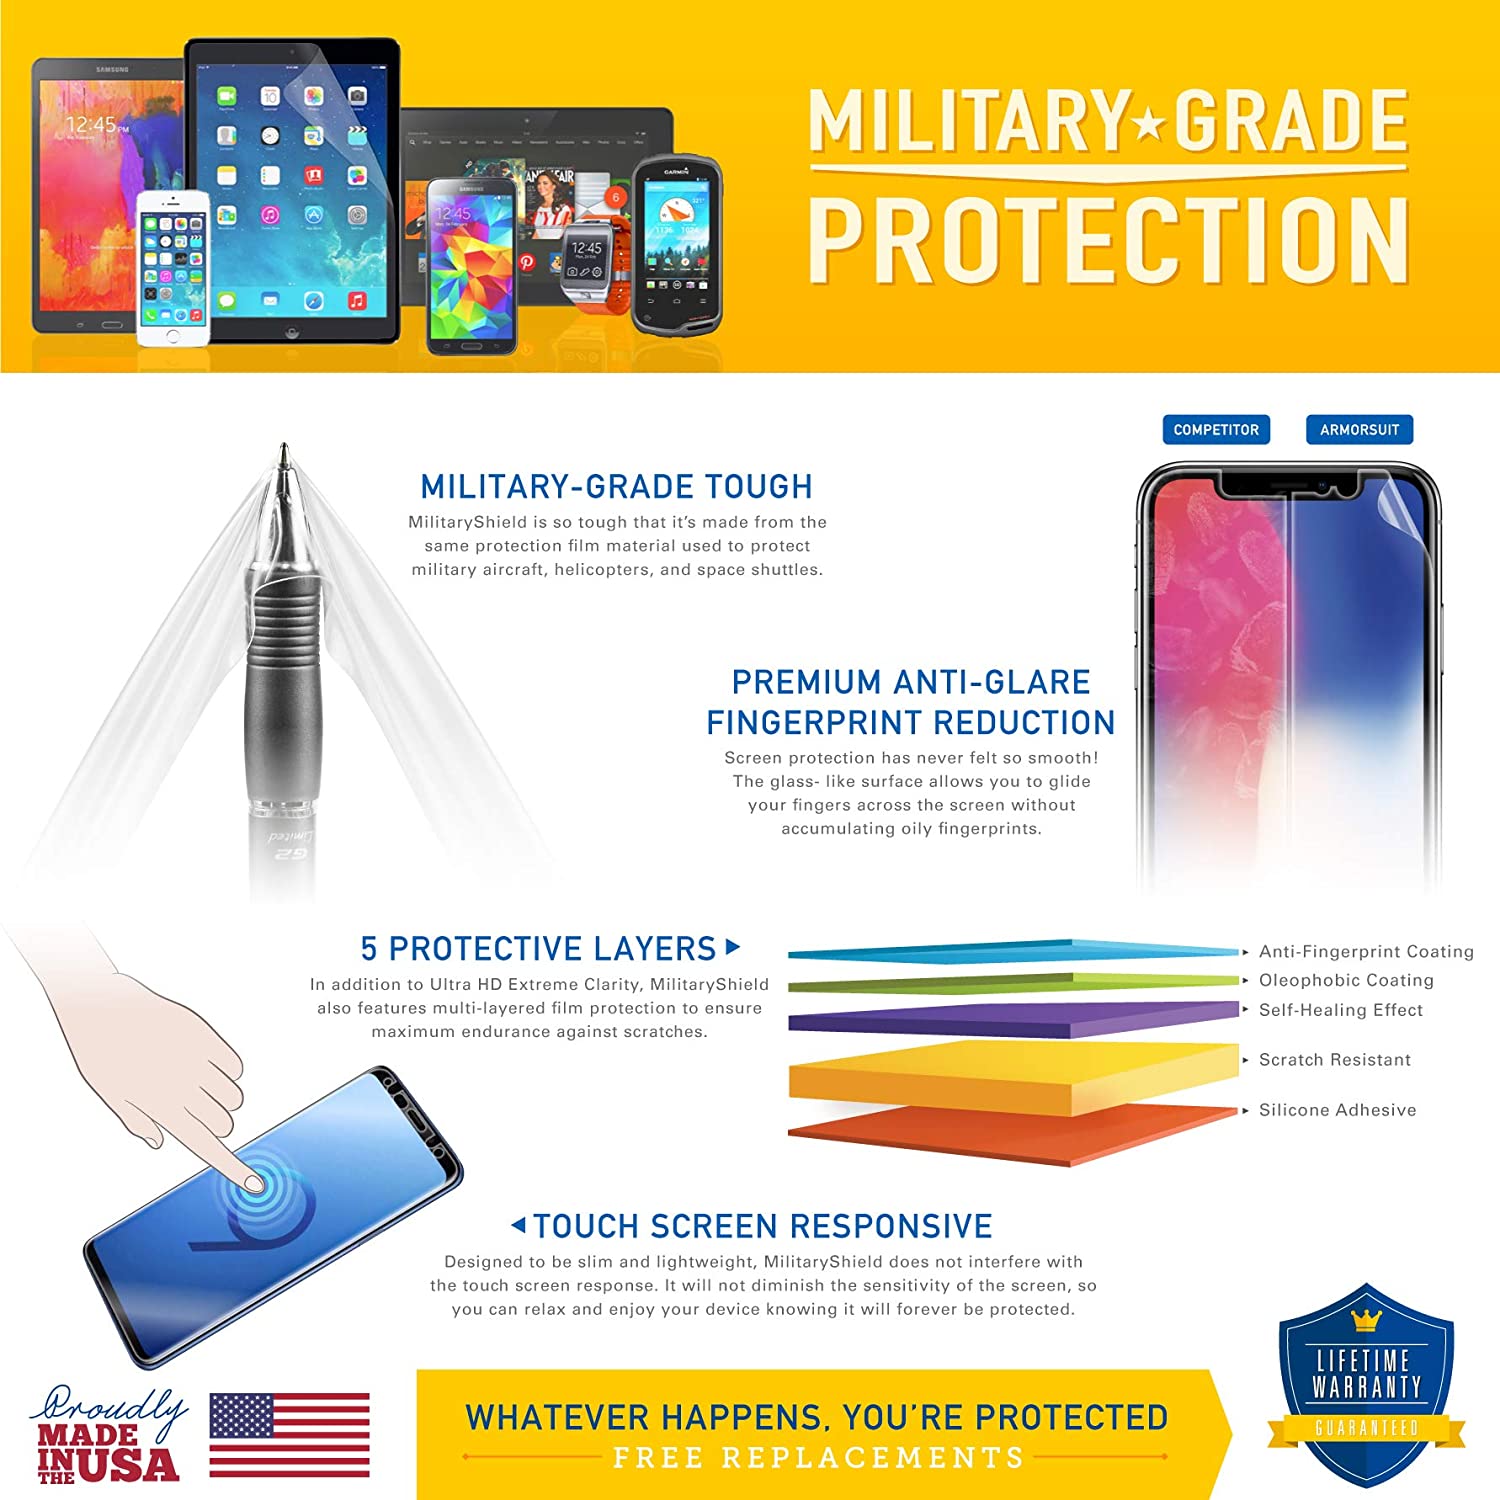 Apple iPhone 7 Plus Screen Protector + Full Body Skin Protector